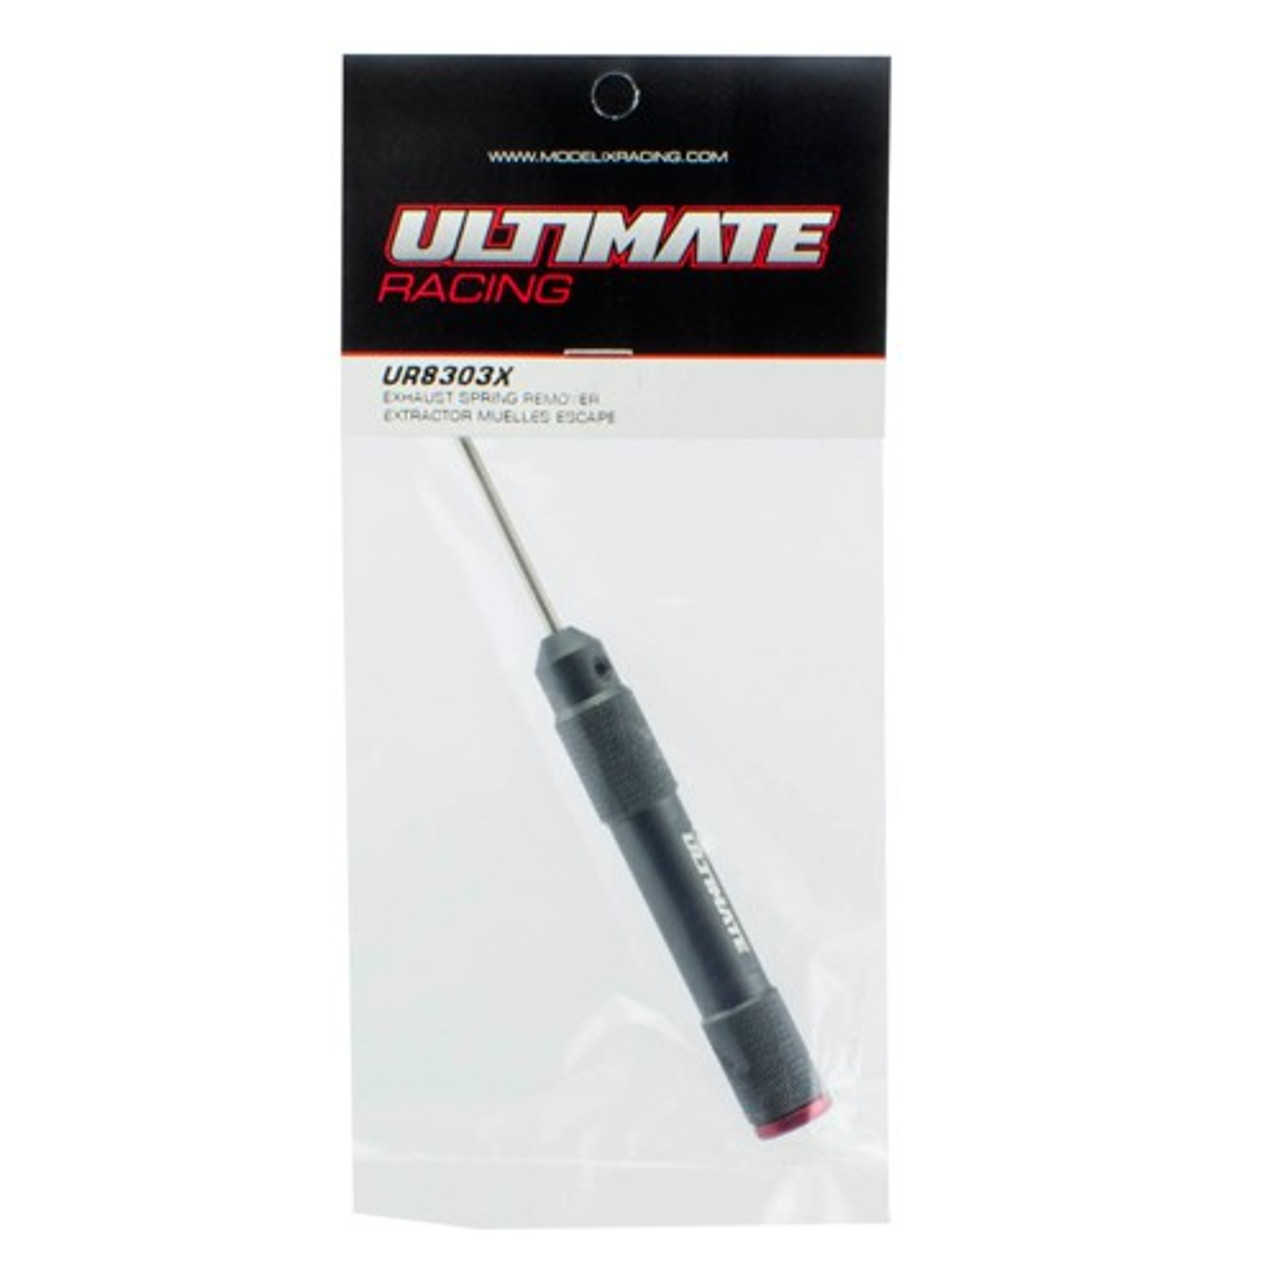 Ultimate Racing Tool Bag with Tools (19 Tools) (UR8804-X), RC Tool Box